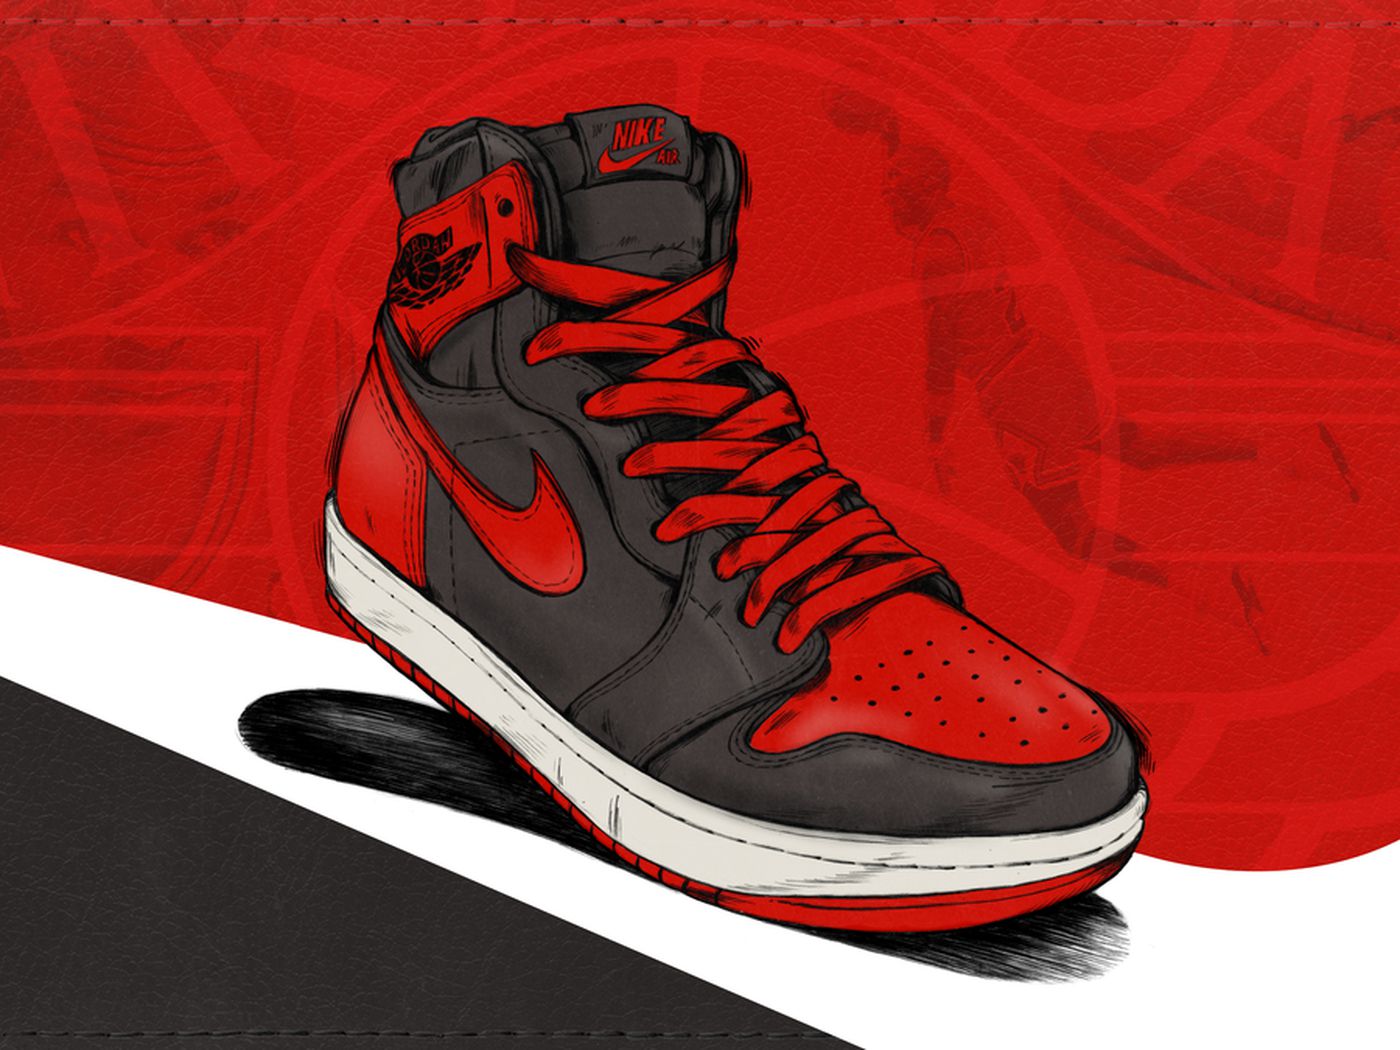 How Nike S Air Jordan Became The Sneaker King Ringer